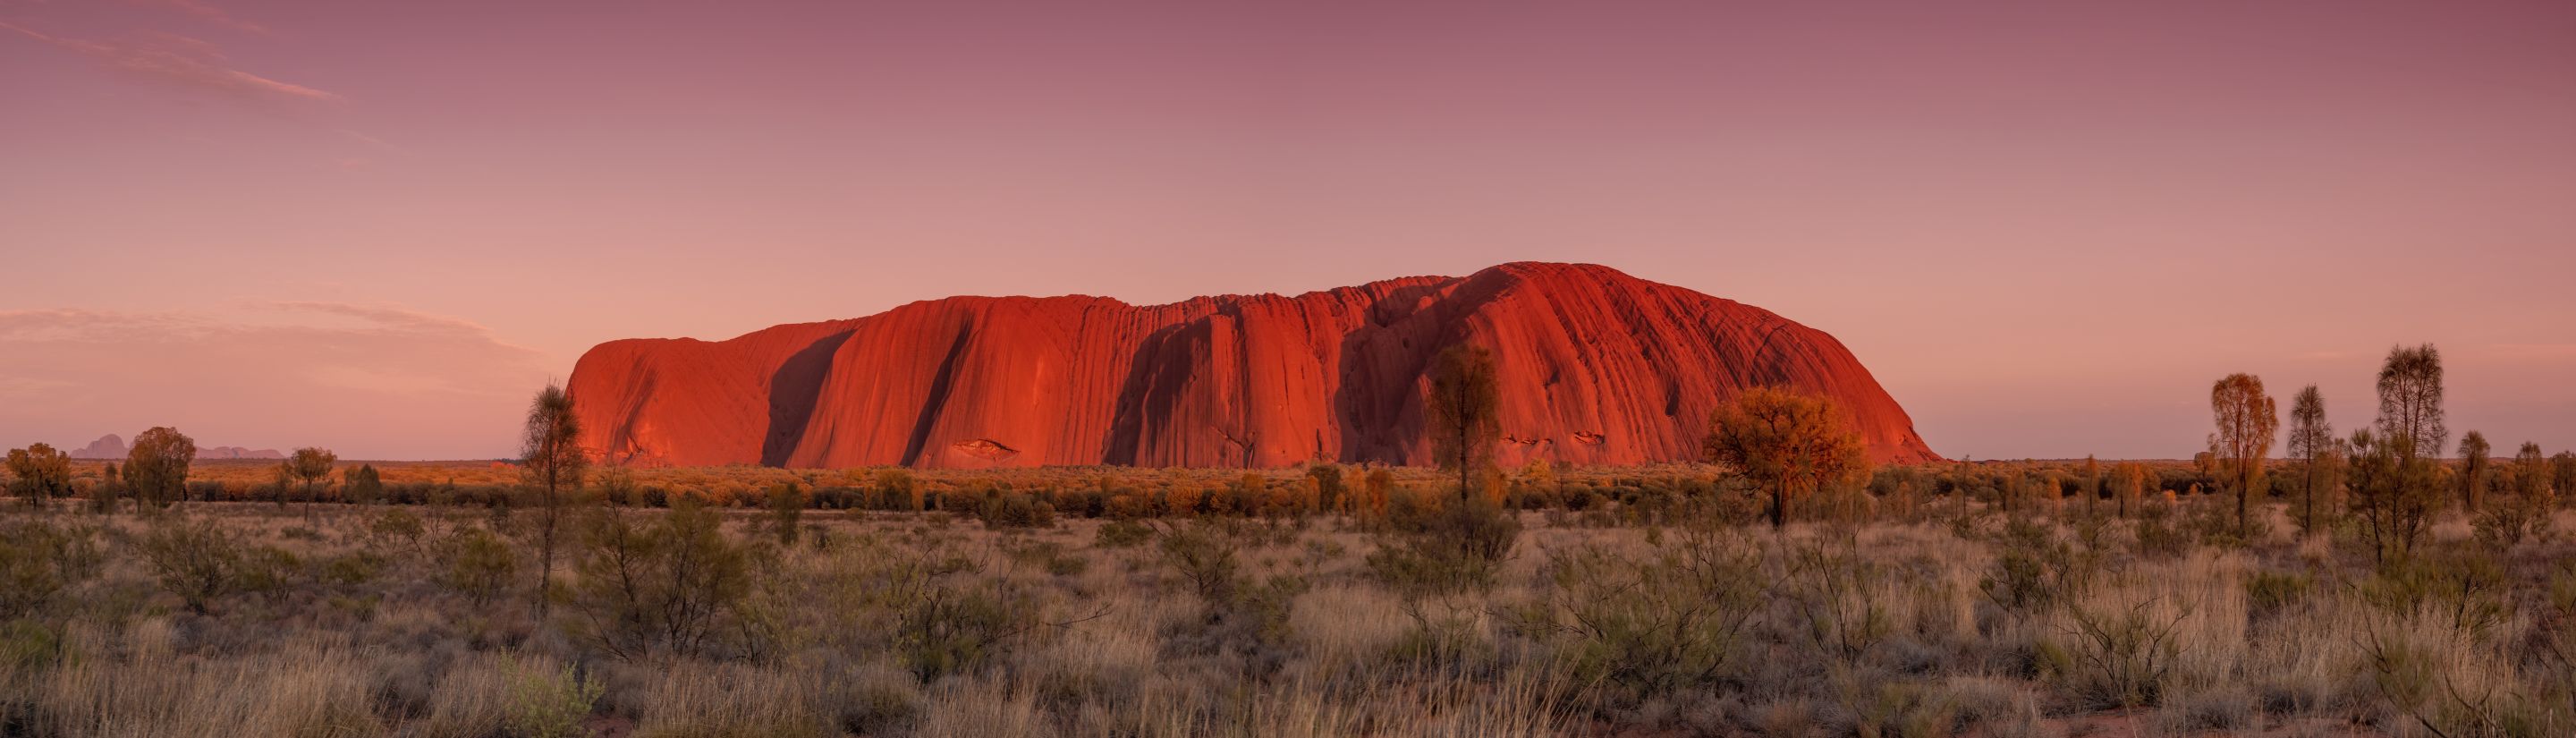 Ayers Rock - heiliger Uluru